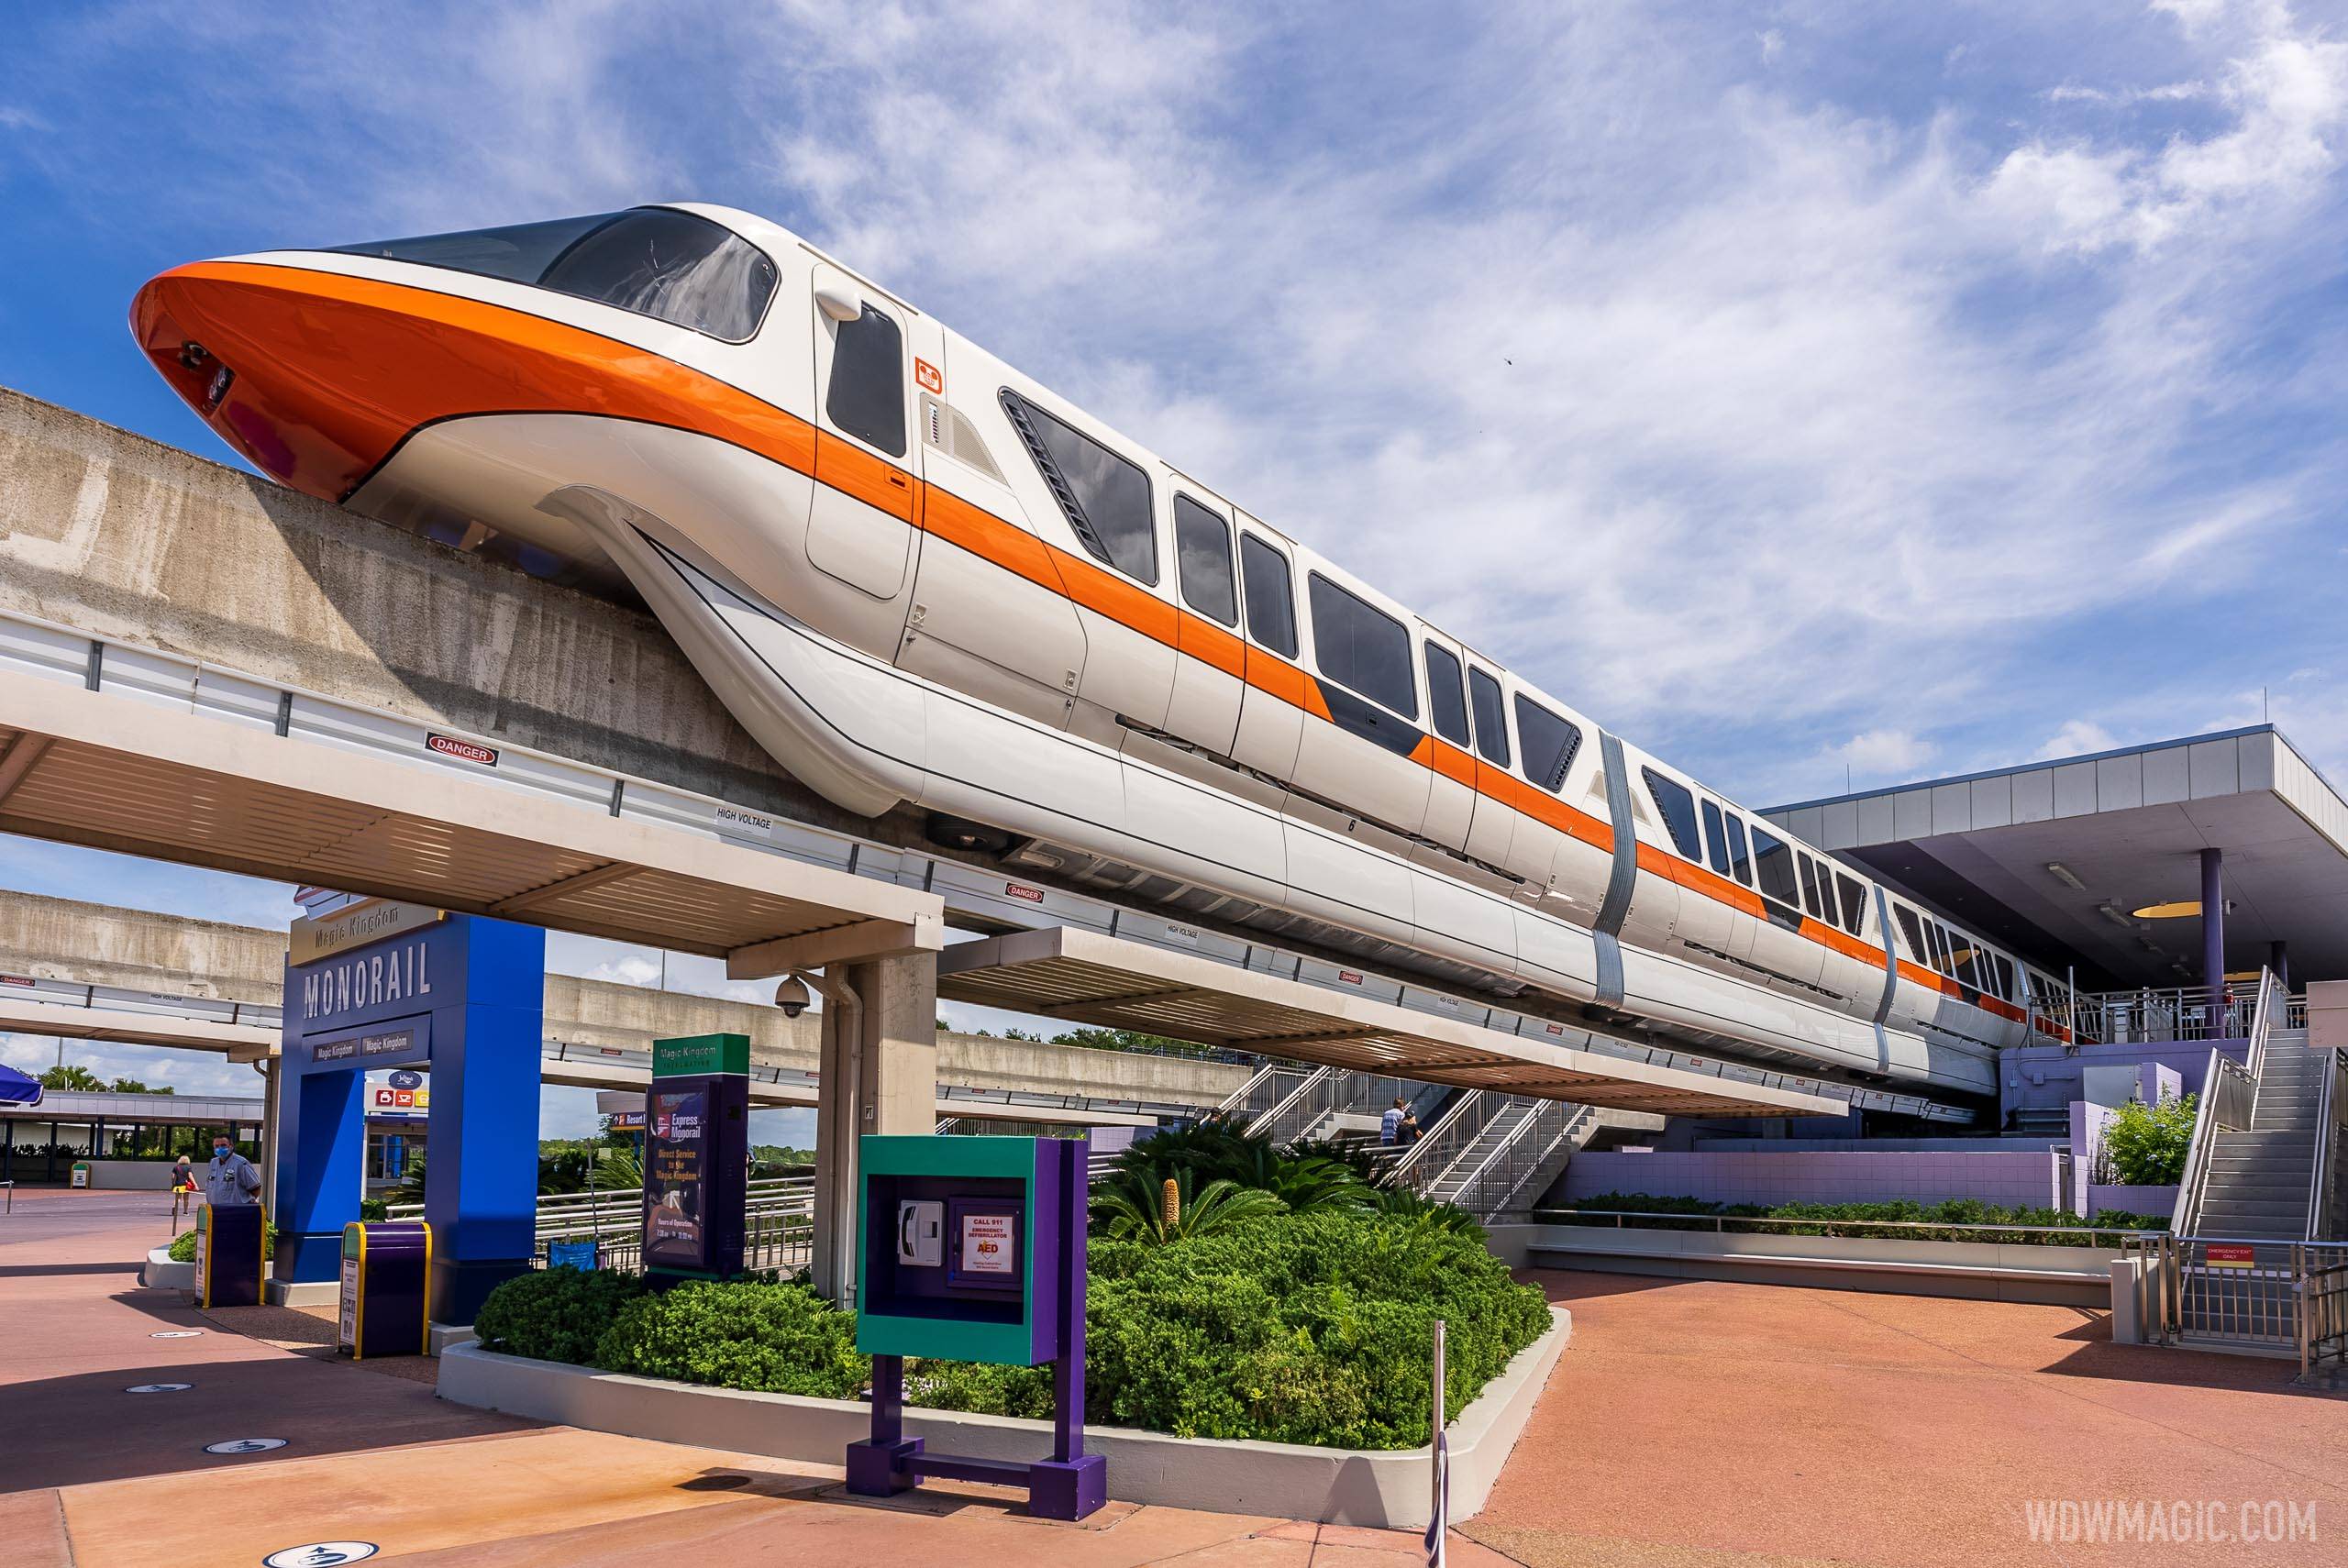 Refurbished Monorail Orange returns to service at Walt Disney World